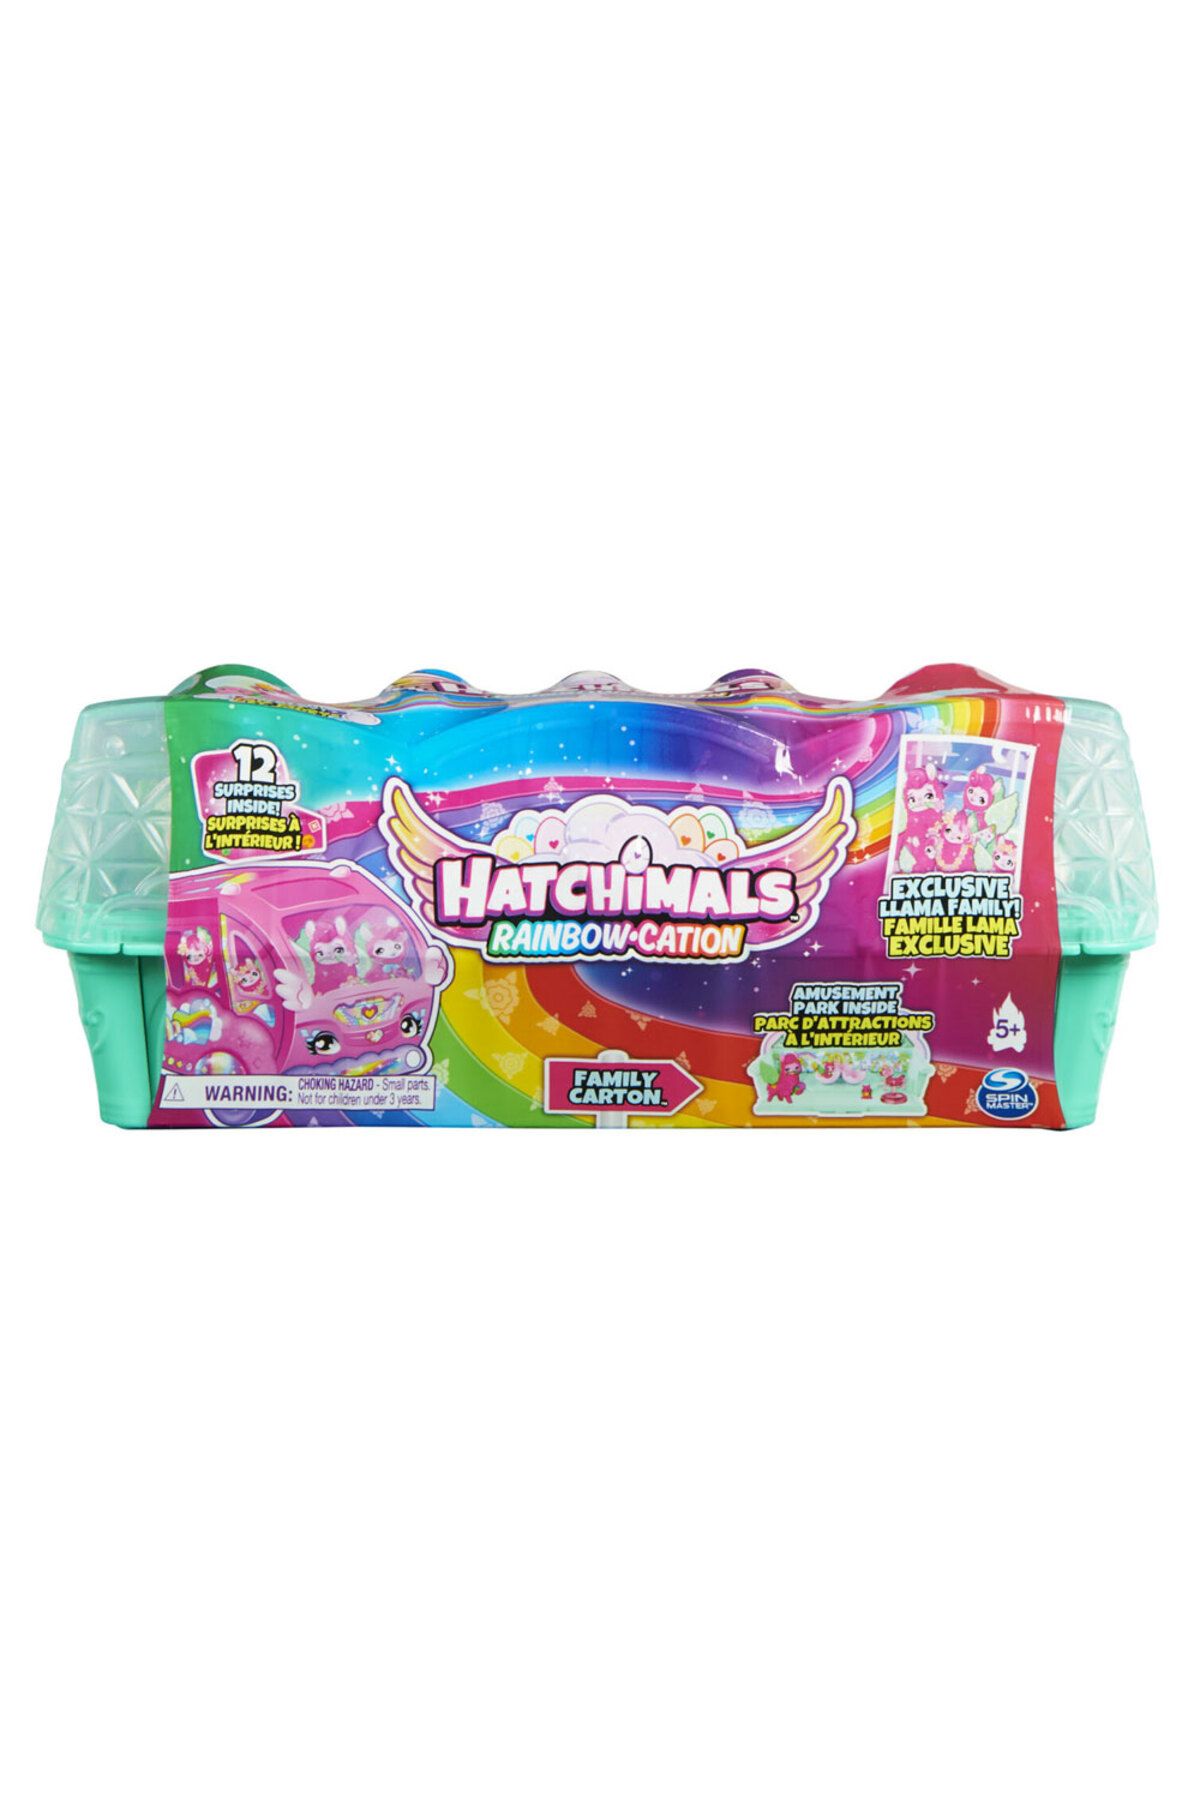 Hatchimals Rainbowcation Aile Maceraları Oyun Seti 6064445